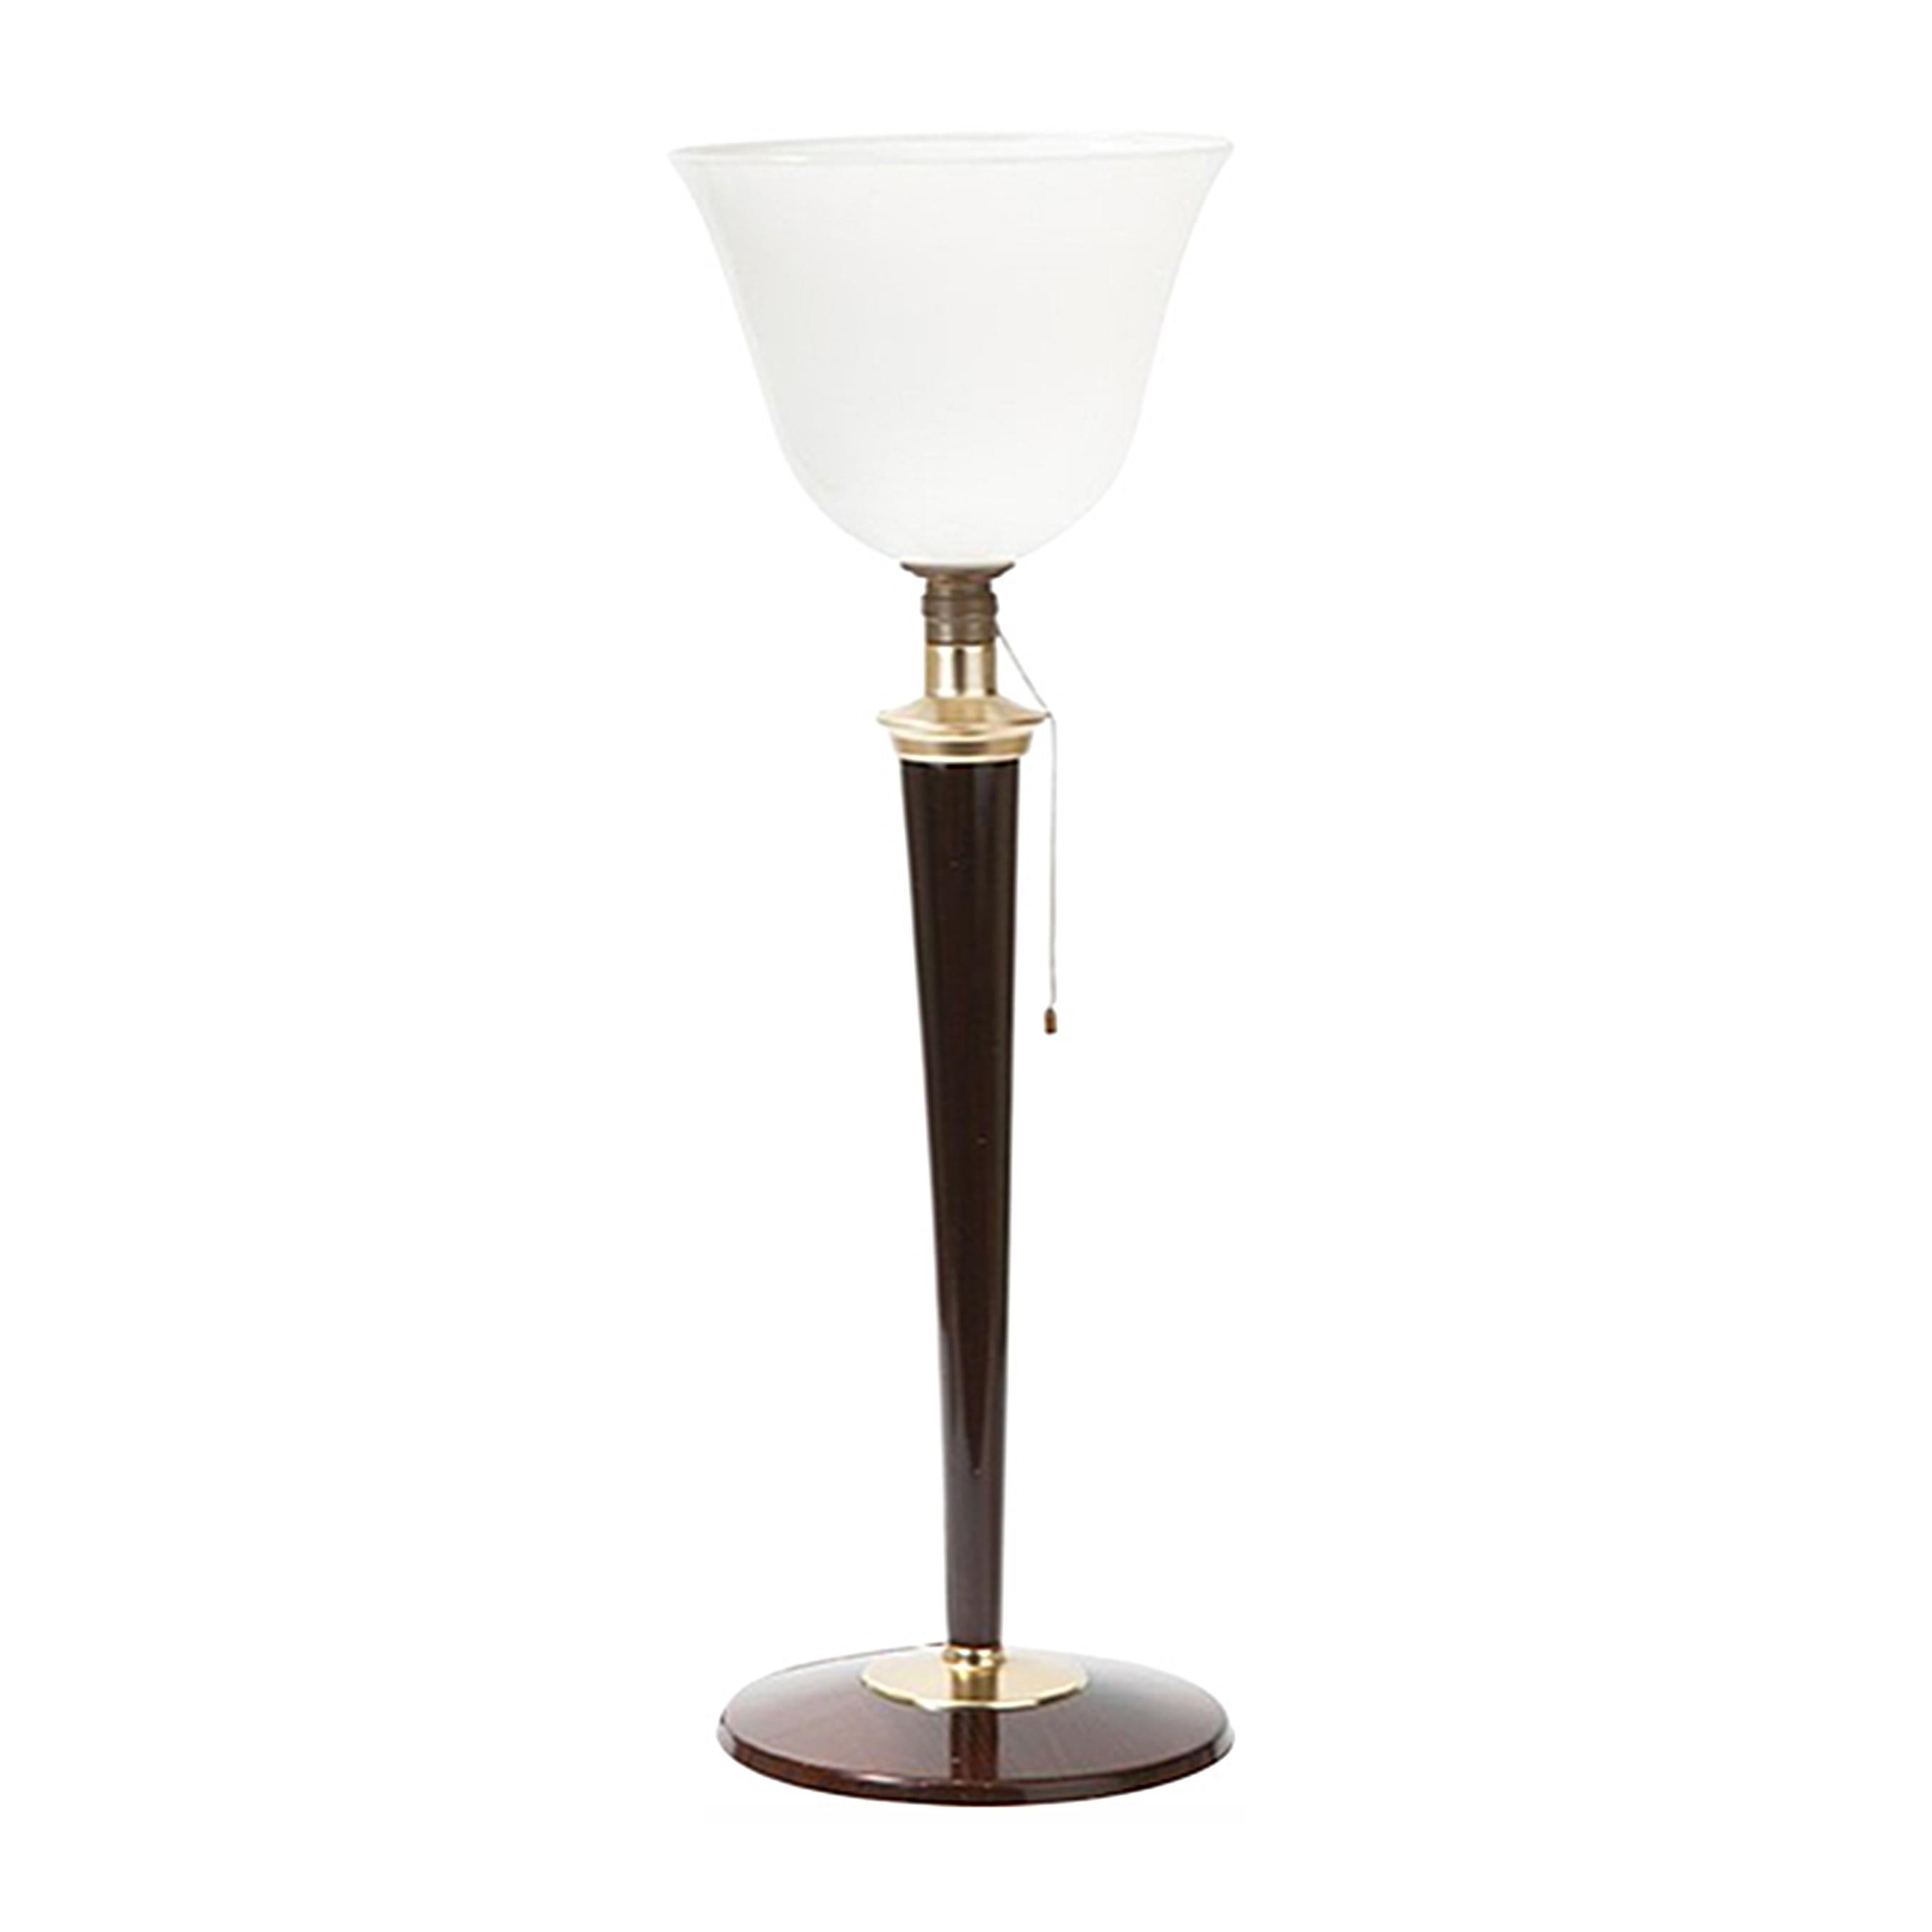 1930s Art Deco Mazda Uplighter Table Lamp  For Sale